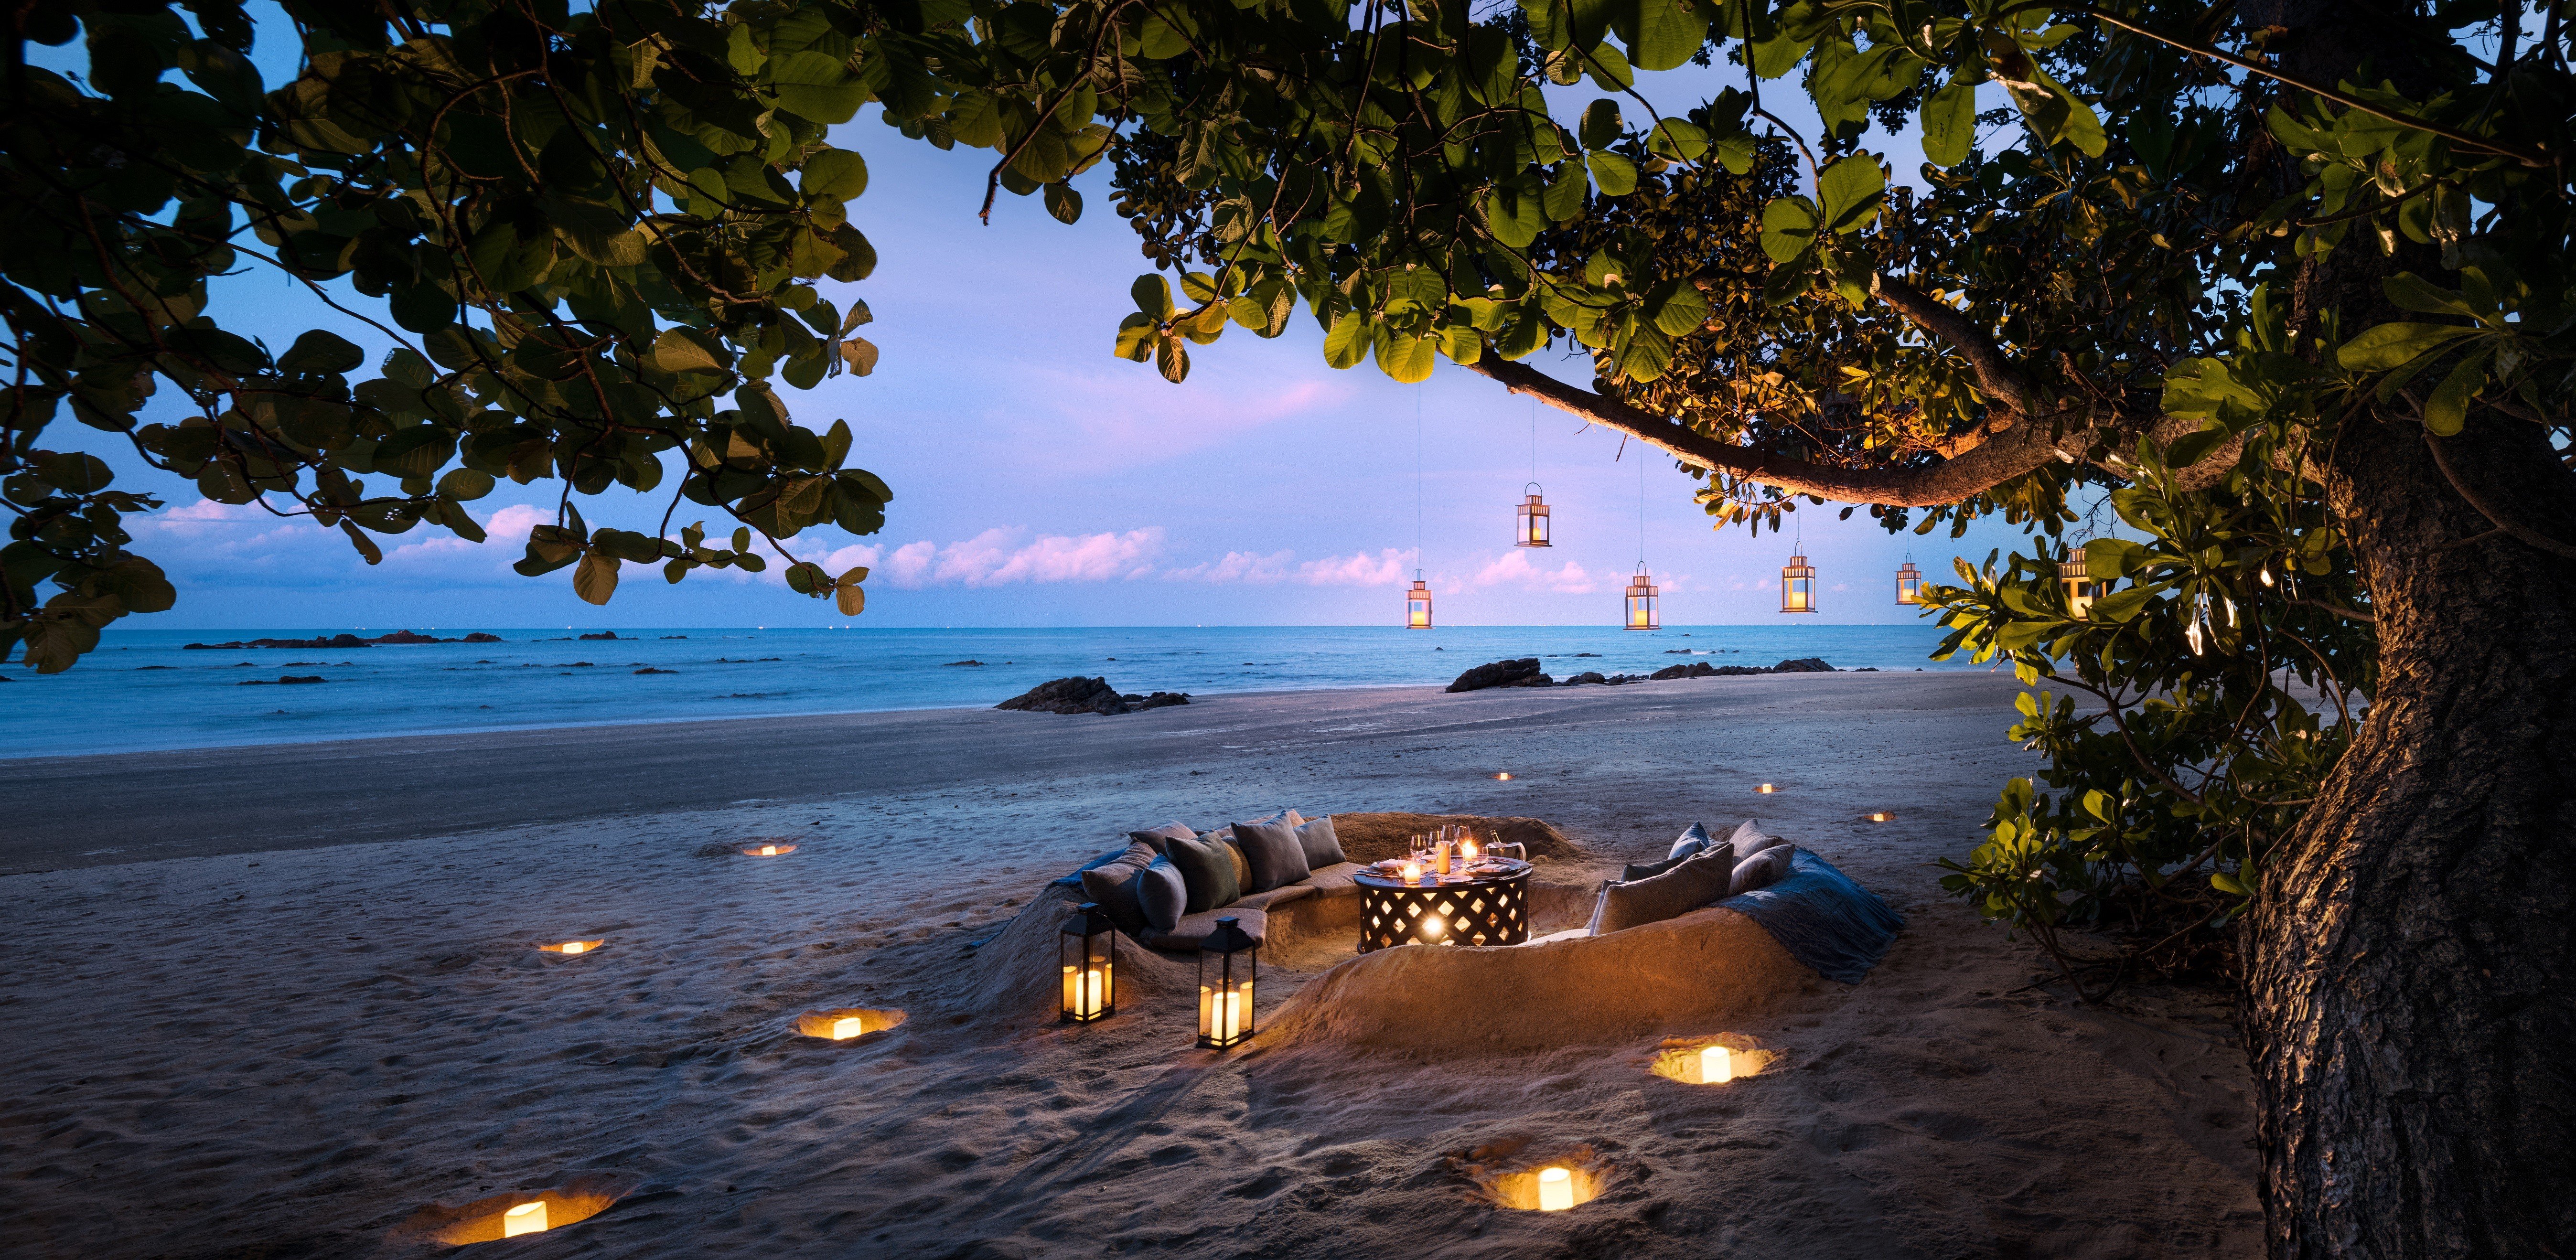 Anantara Desaru Coast Resort in Malaysia offers dining by design. Photos: Anantara